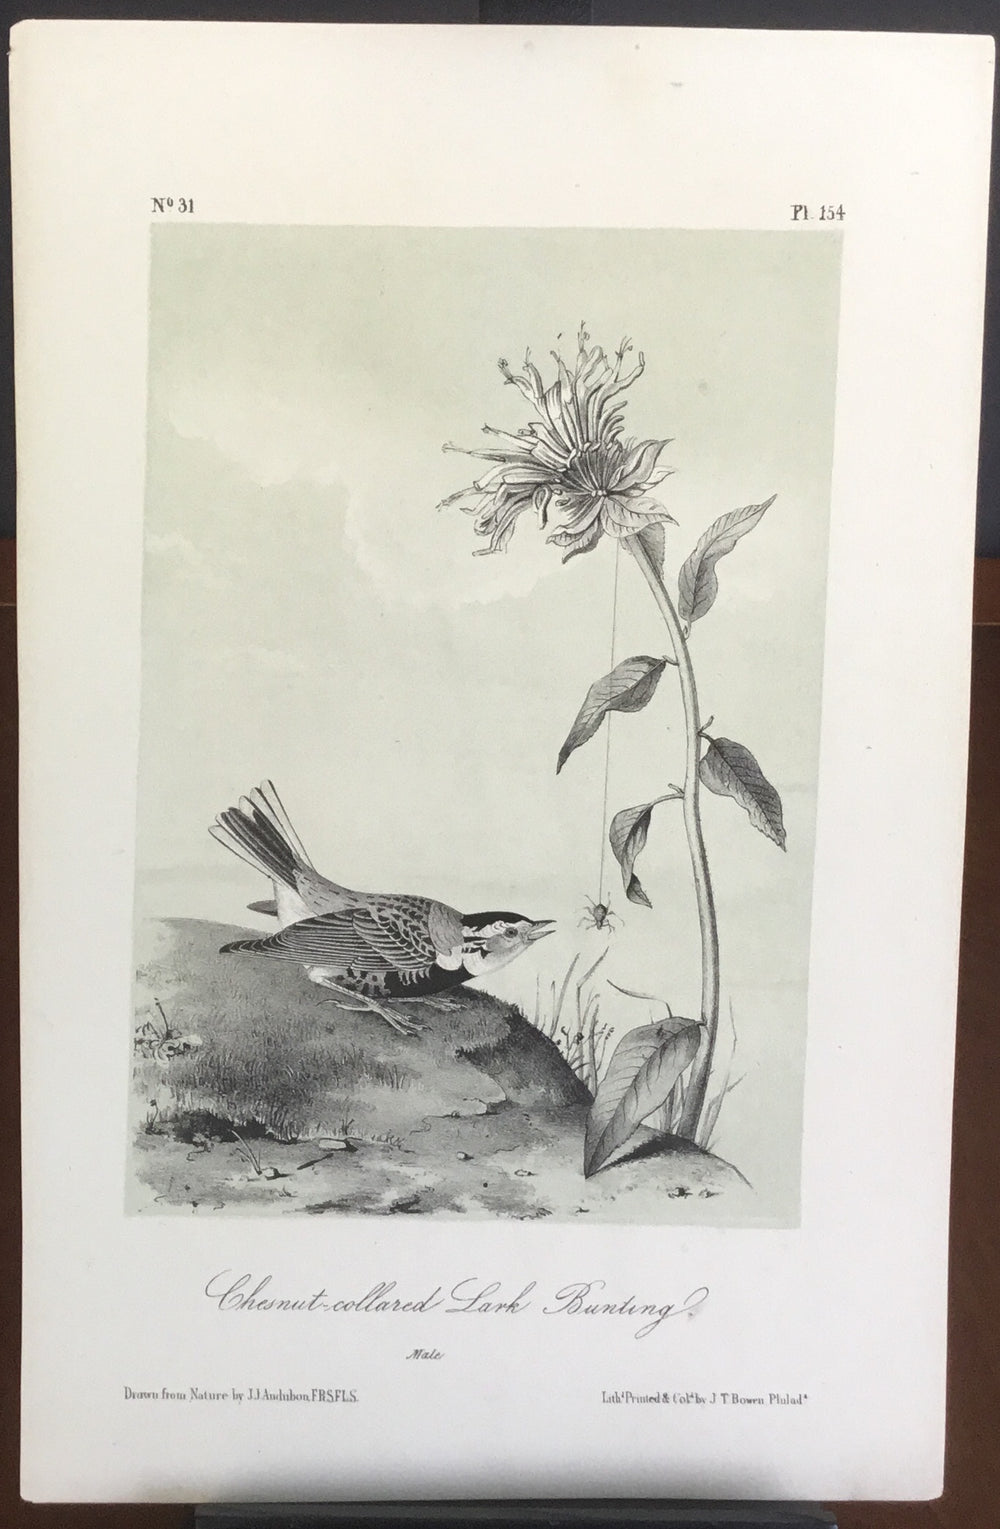 Audubon Octavo Chestnut-collard Lark Bunting, plate 154, uncolored test sheet, 7 x 11